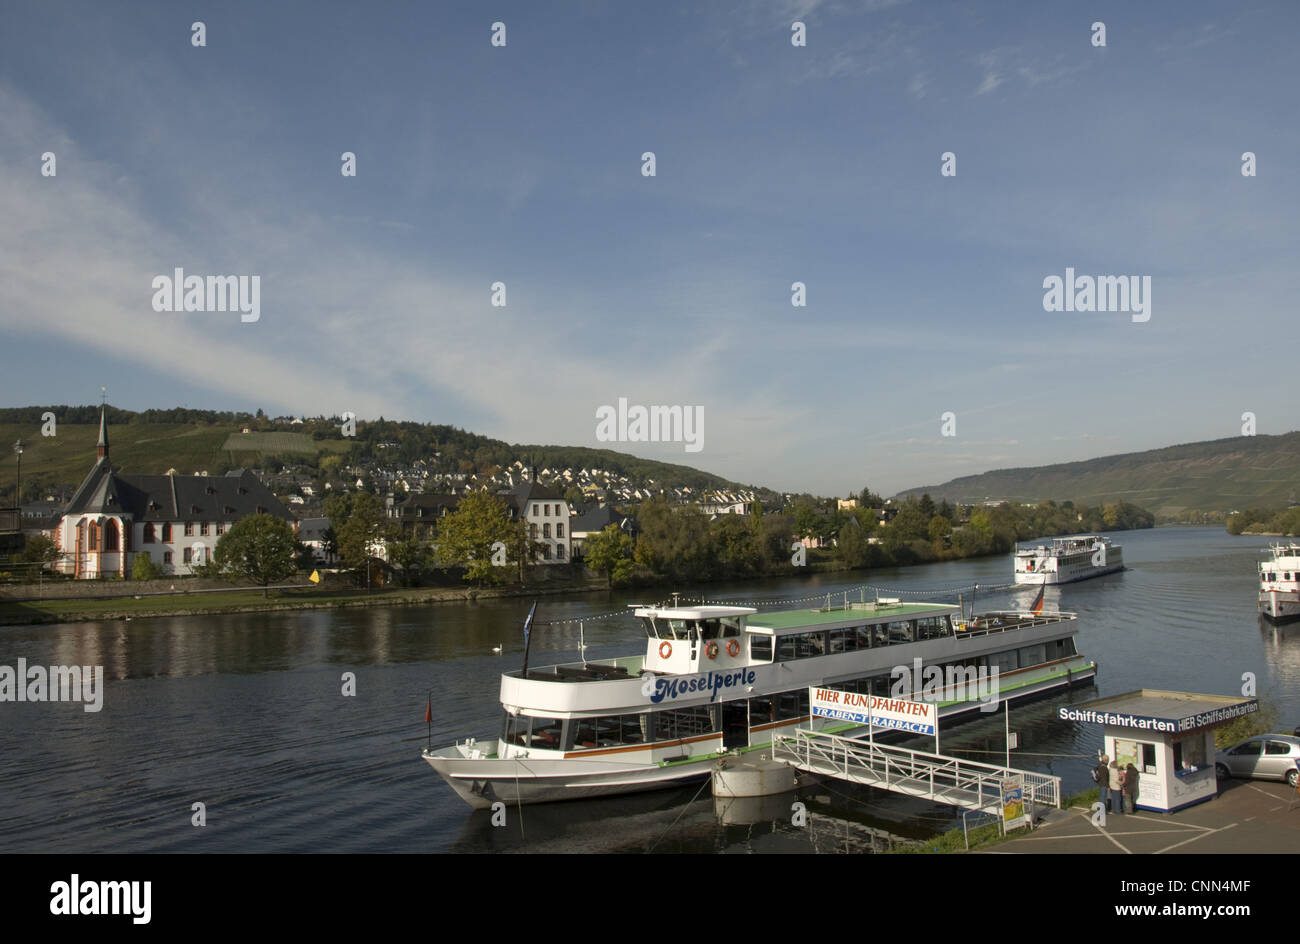 View of tourist boats on river, River Mosel, Bernkastel, Rhineland-Palatinate, Germany Stock Photo